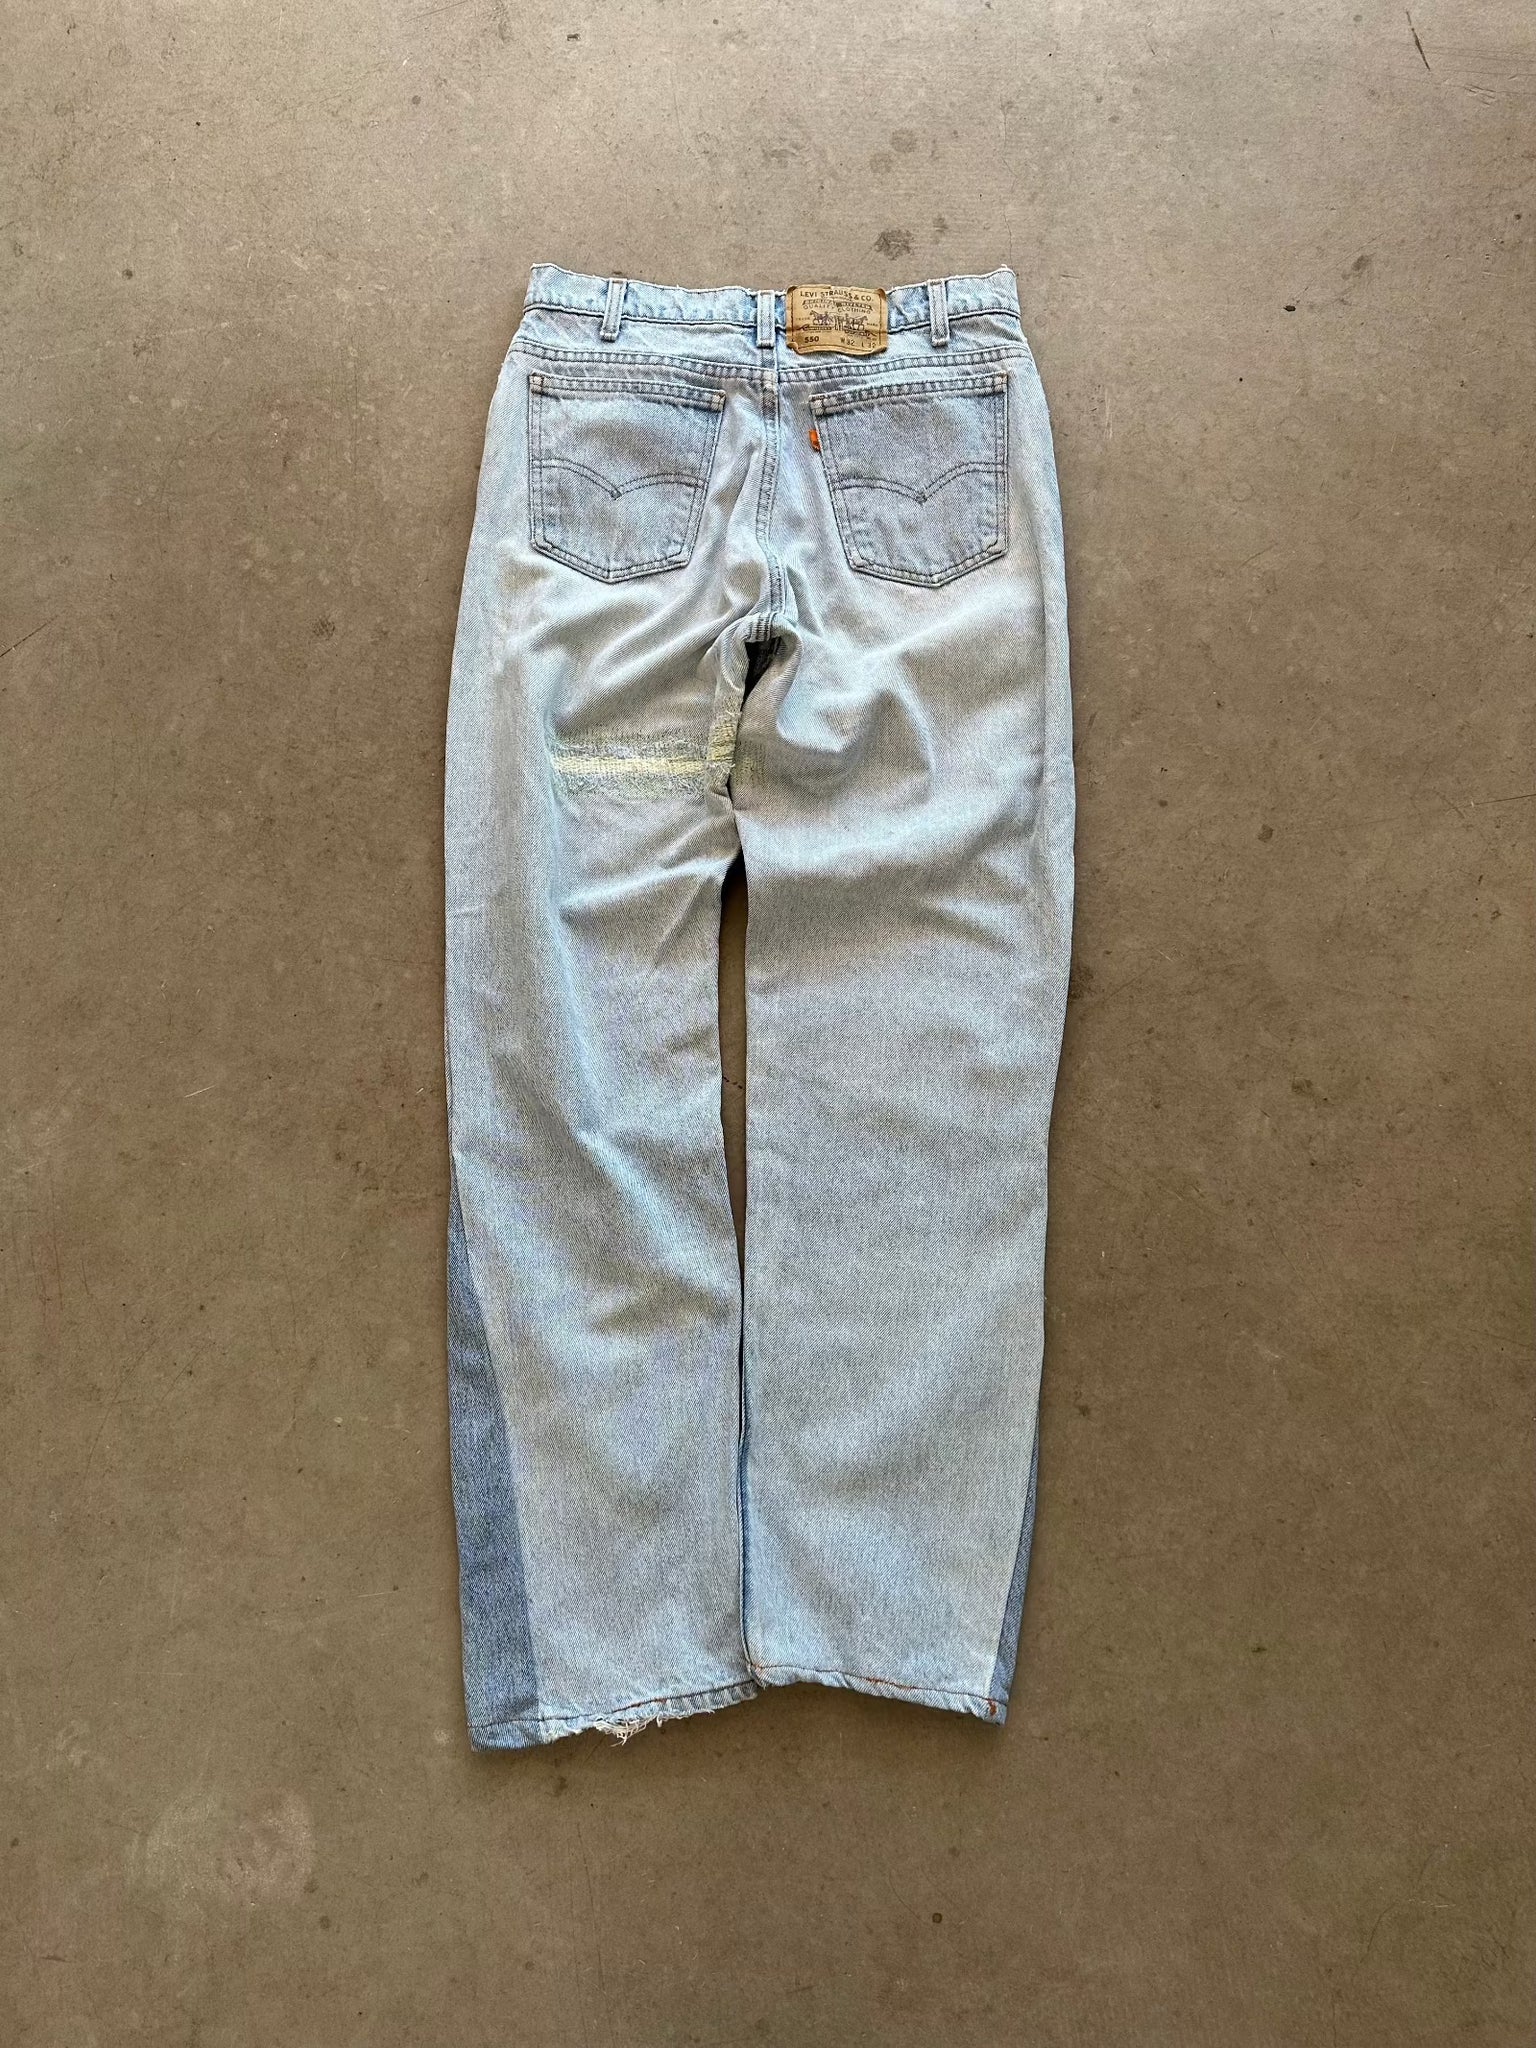 1990's Levi's Orange Tab 550 Repaired Jeans - 32 x 32